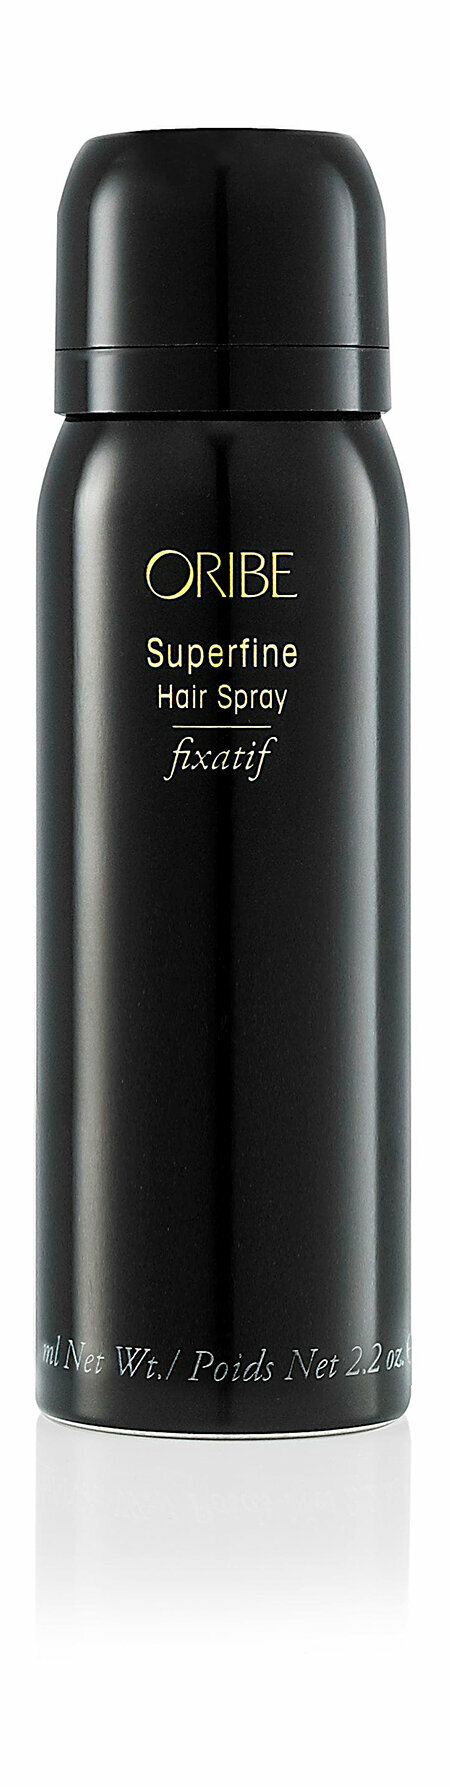 ORIBE Superfine Hair Spray Спрей для средней фиксации волос, 75 мл